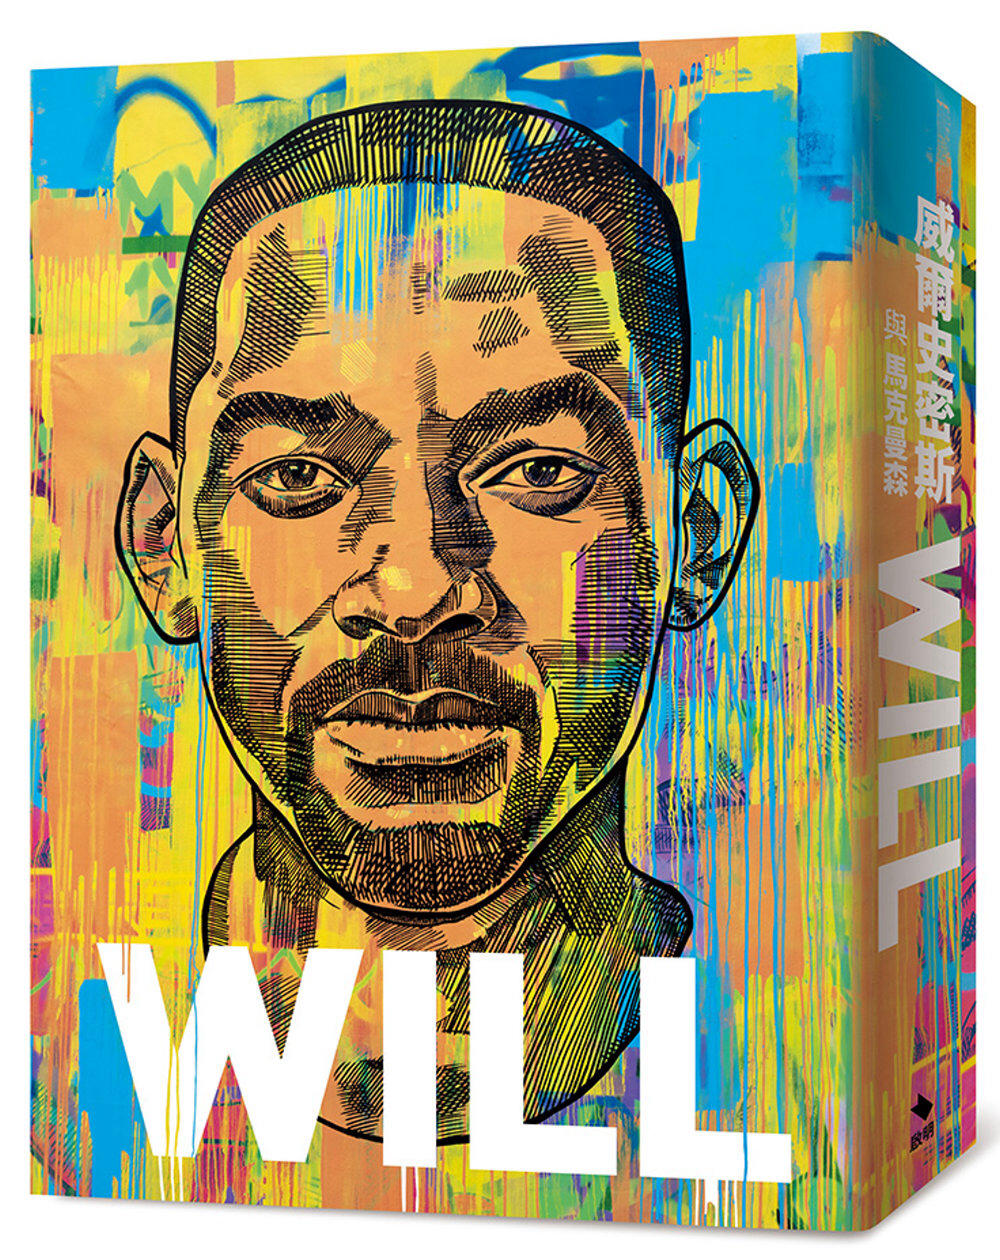 WILL : 威爾史密斯回憶錄(另開視窗)